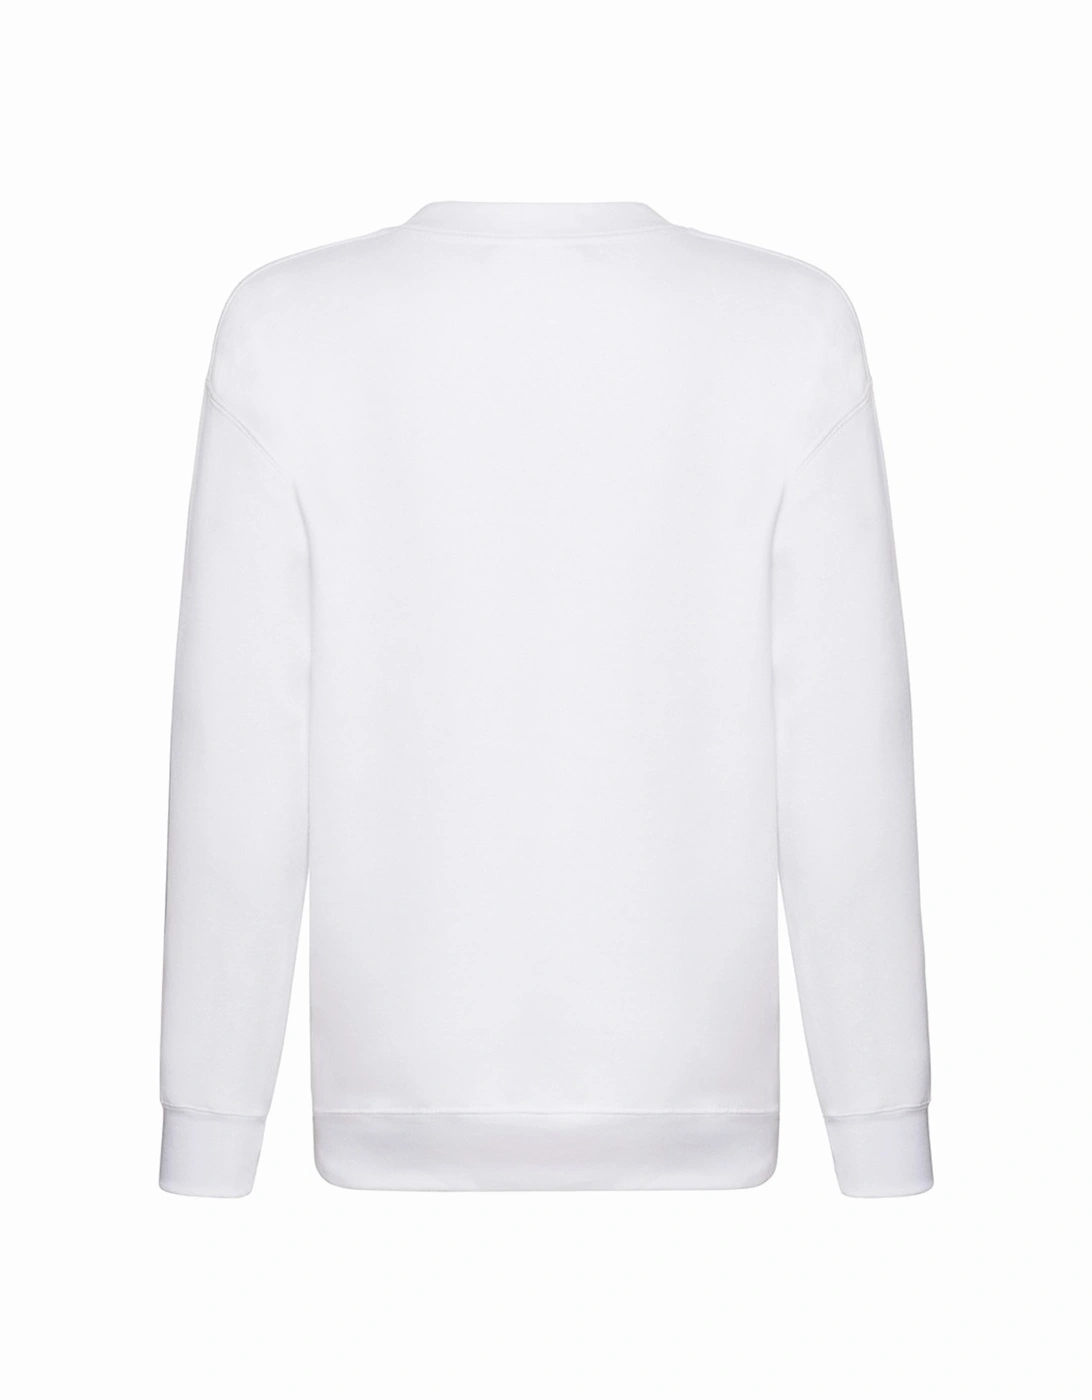 Kids Unisex Premium 70/30 Sweatshirt (Pack of 2)